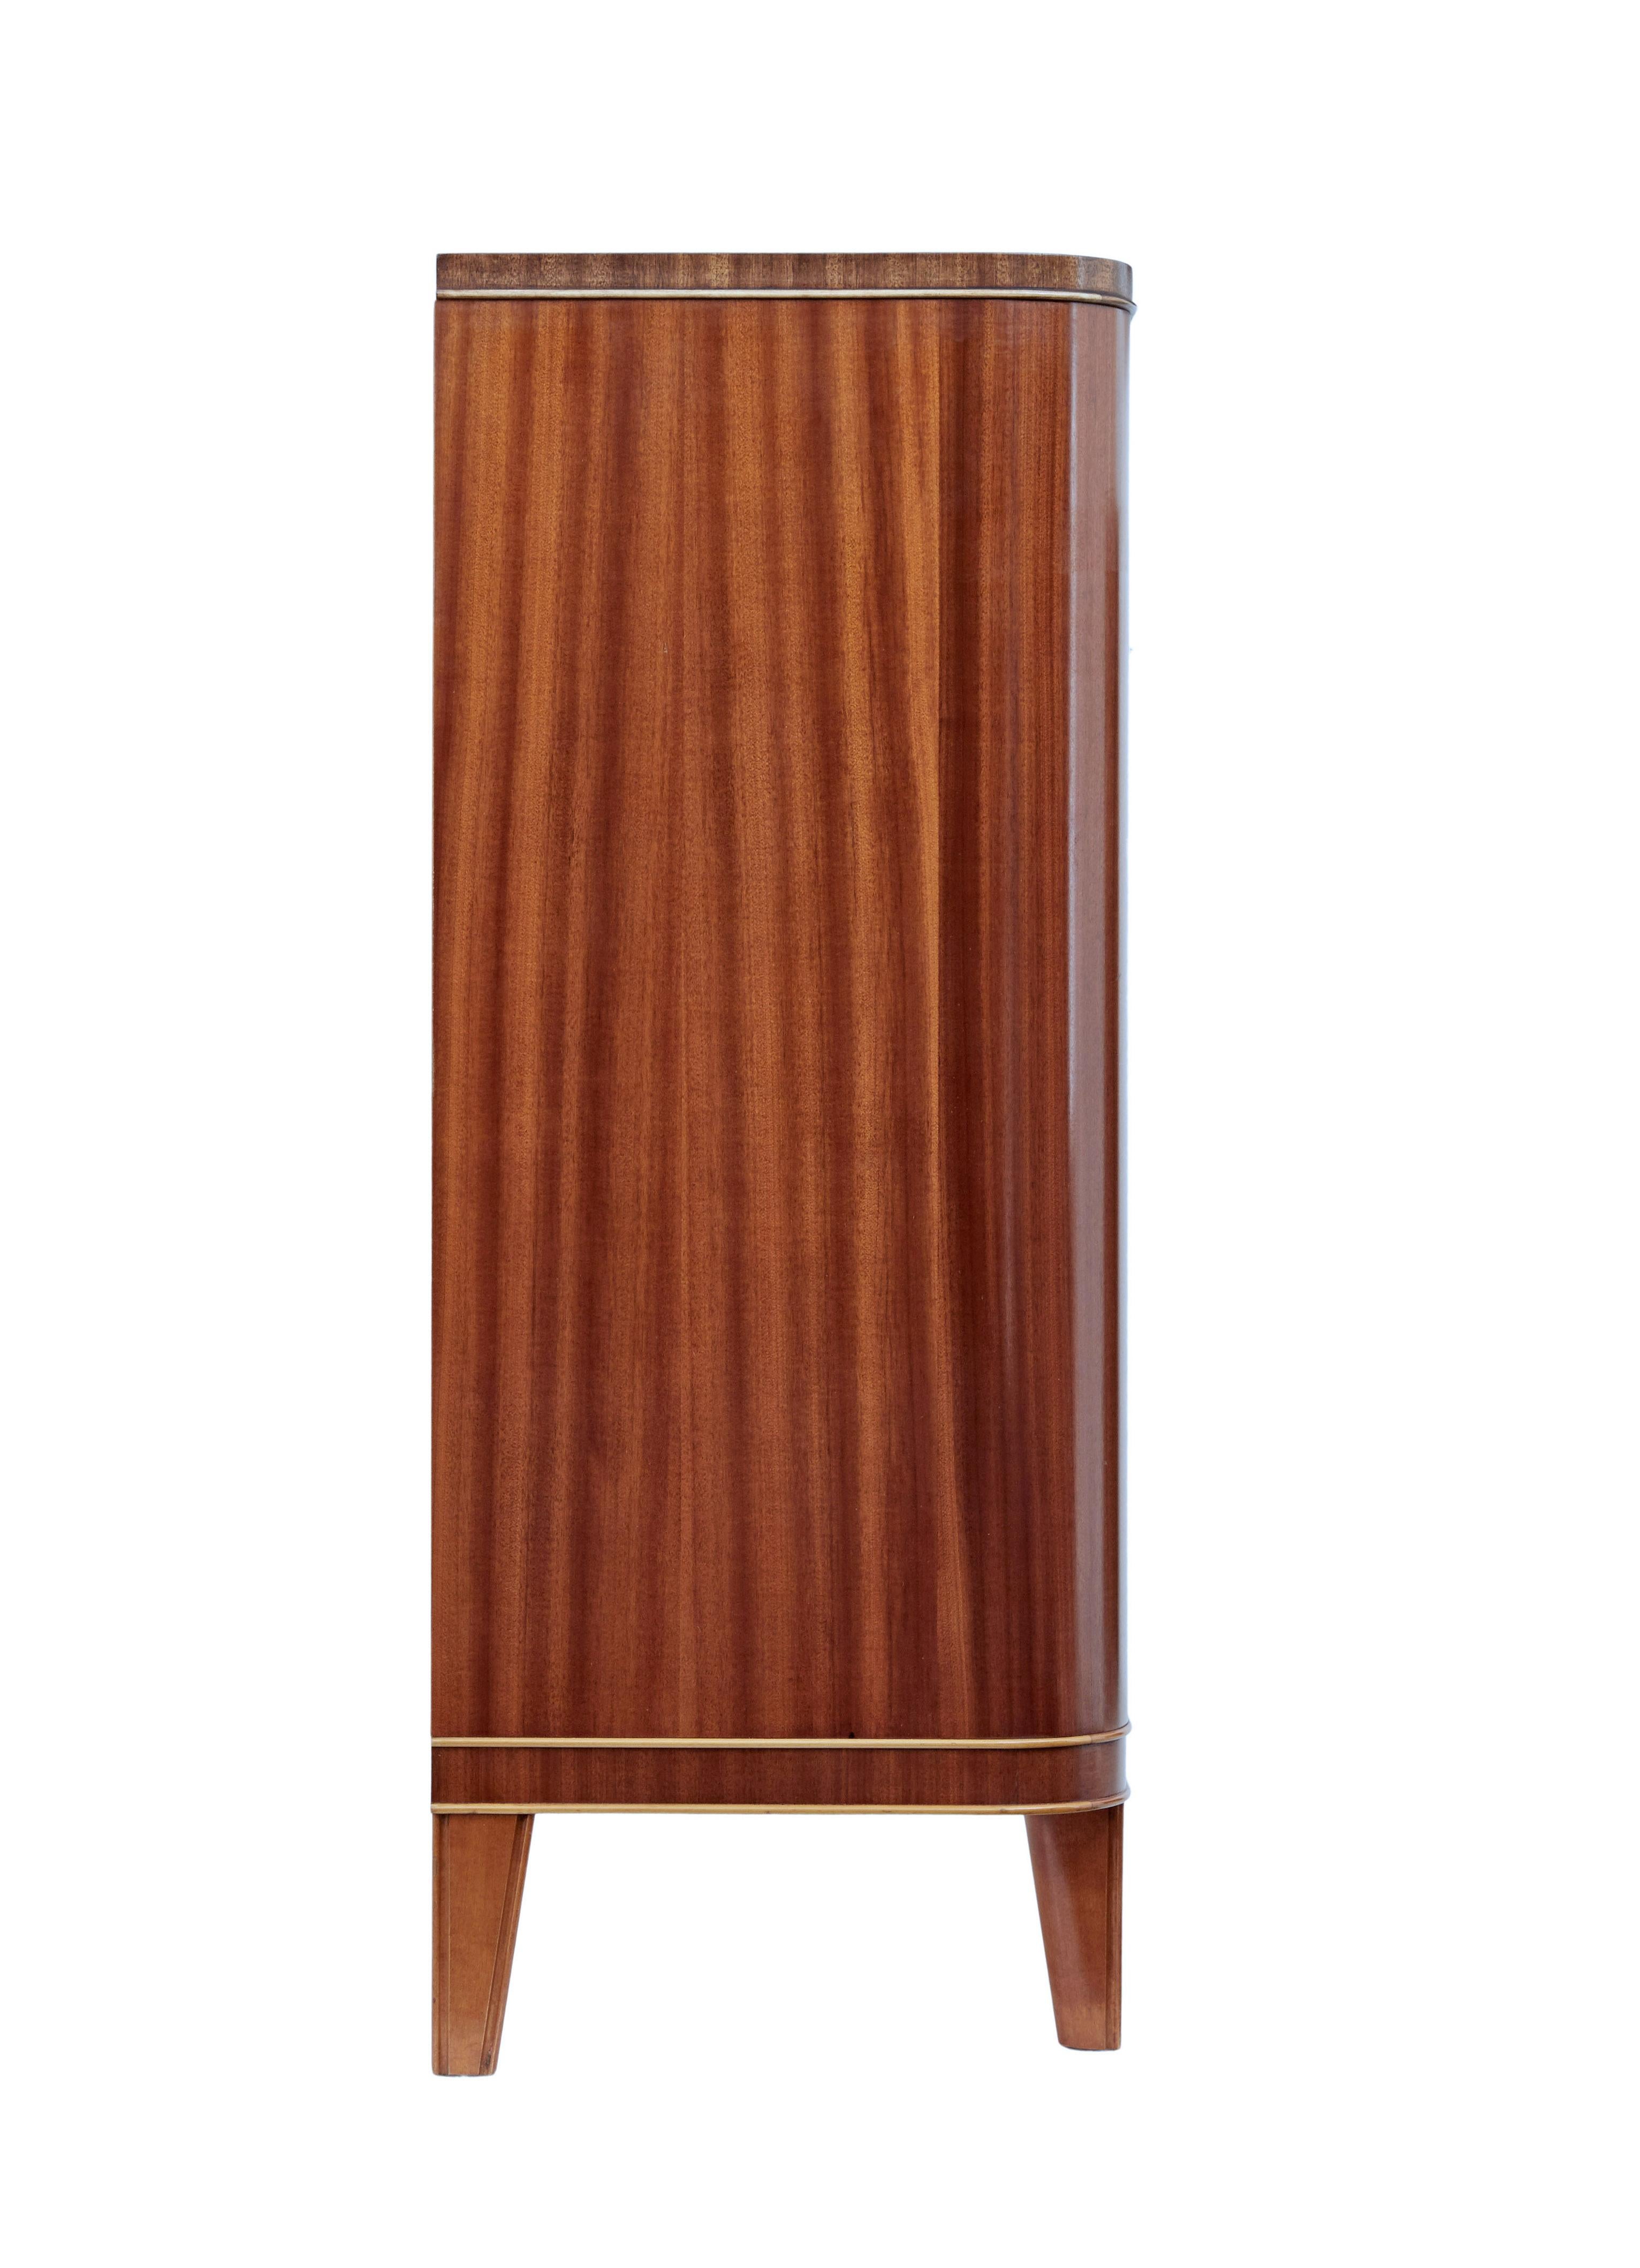 Mid-Century Modern Mid 20th century Scandinavian modern mahogany sideboard